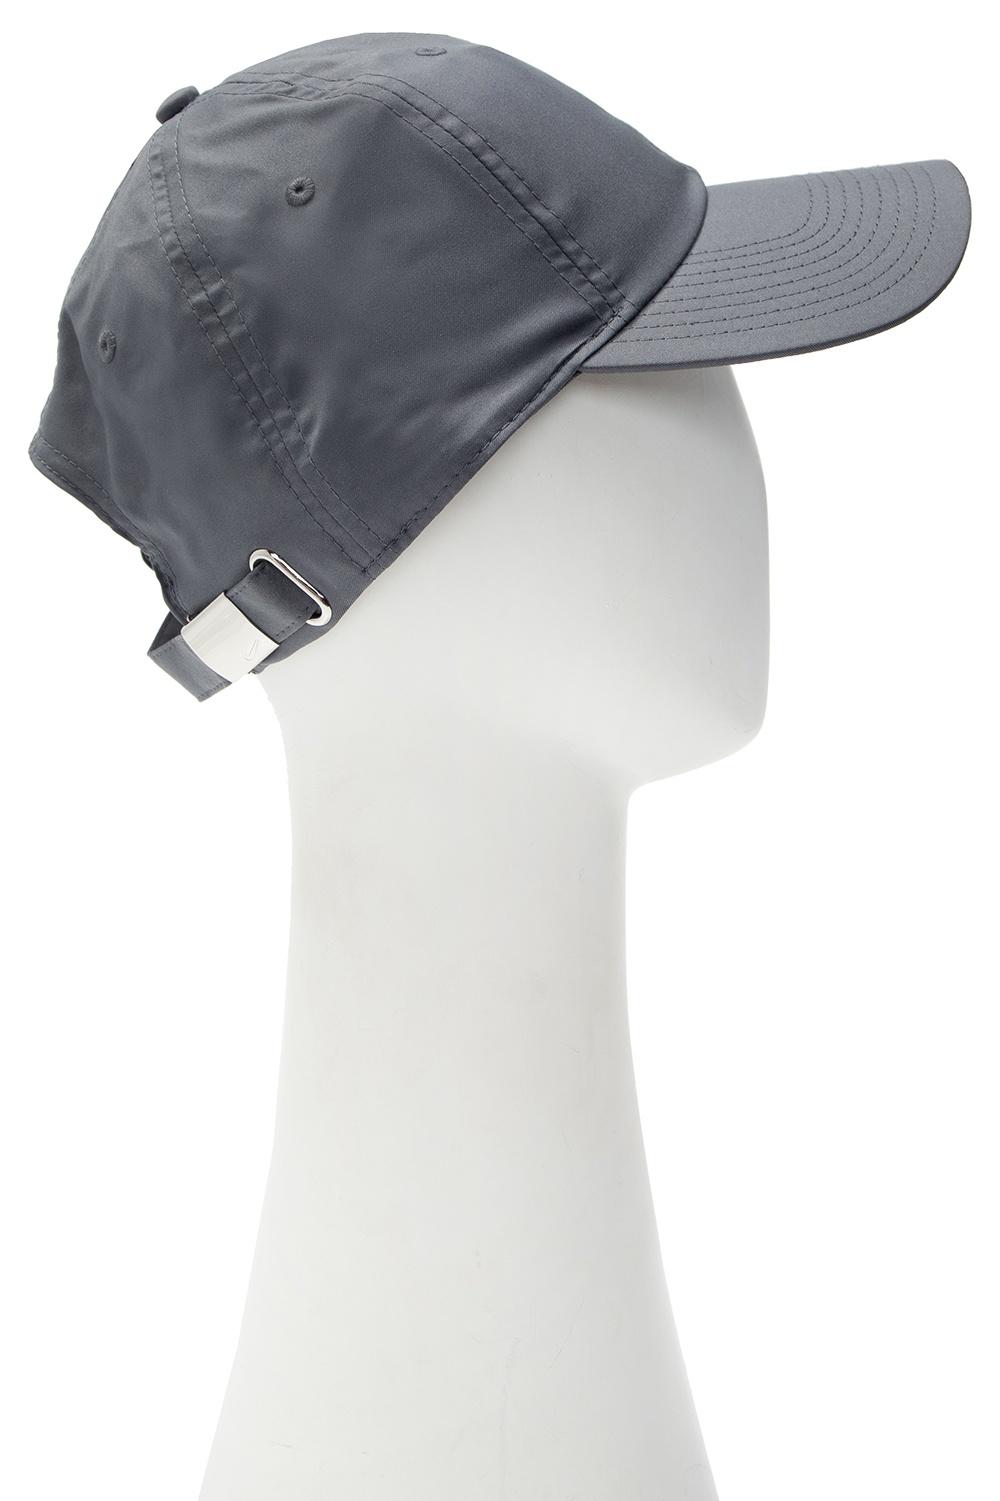 Nike Synthetic Metal Swoosh Cap in Grey (Gray) for Men - Lyst